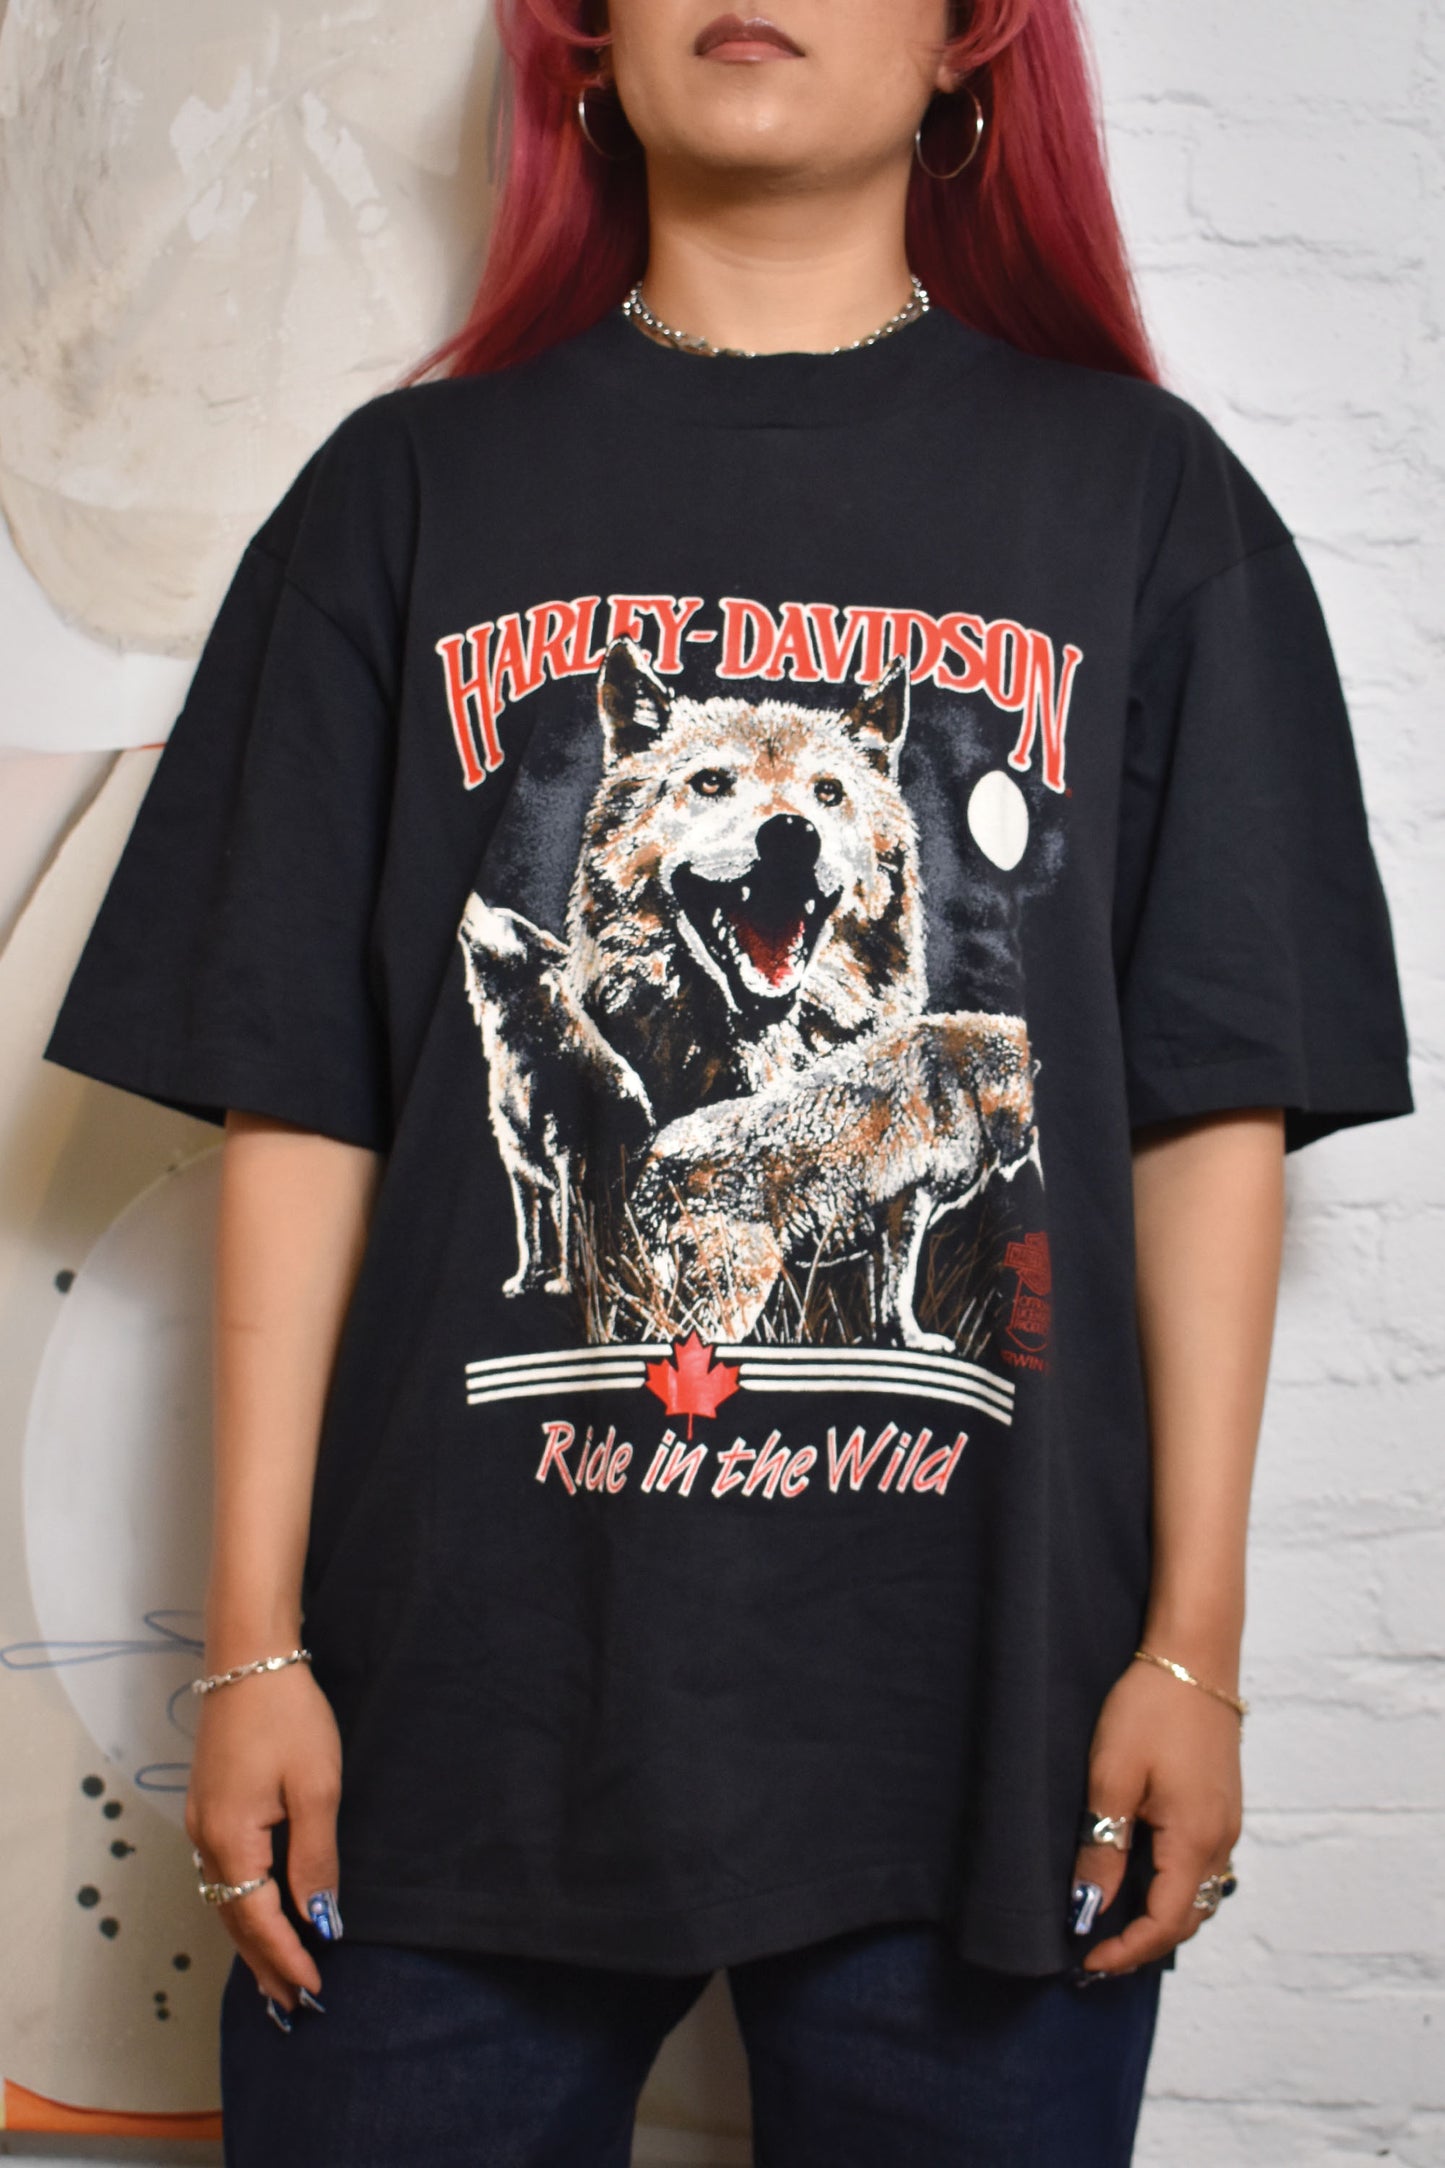 Vintage 1990s "Harley Davidson Irwin" T-shirt